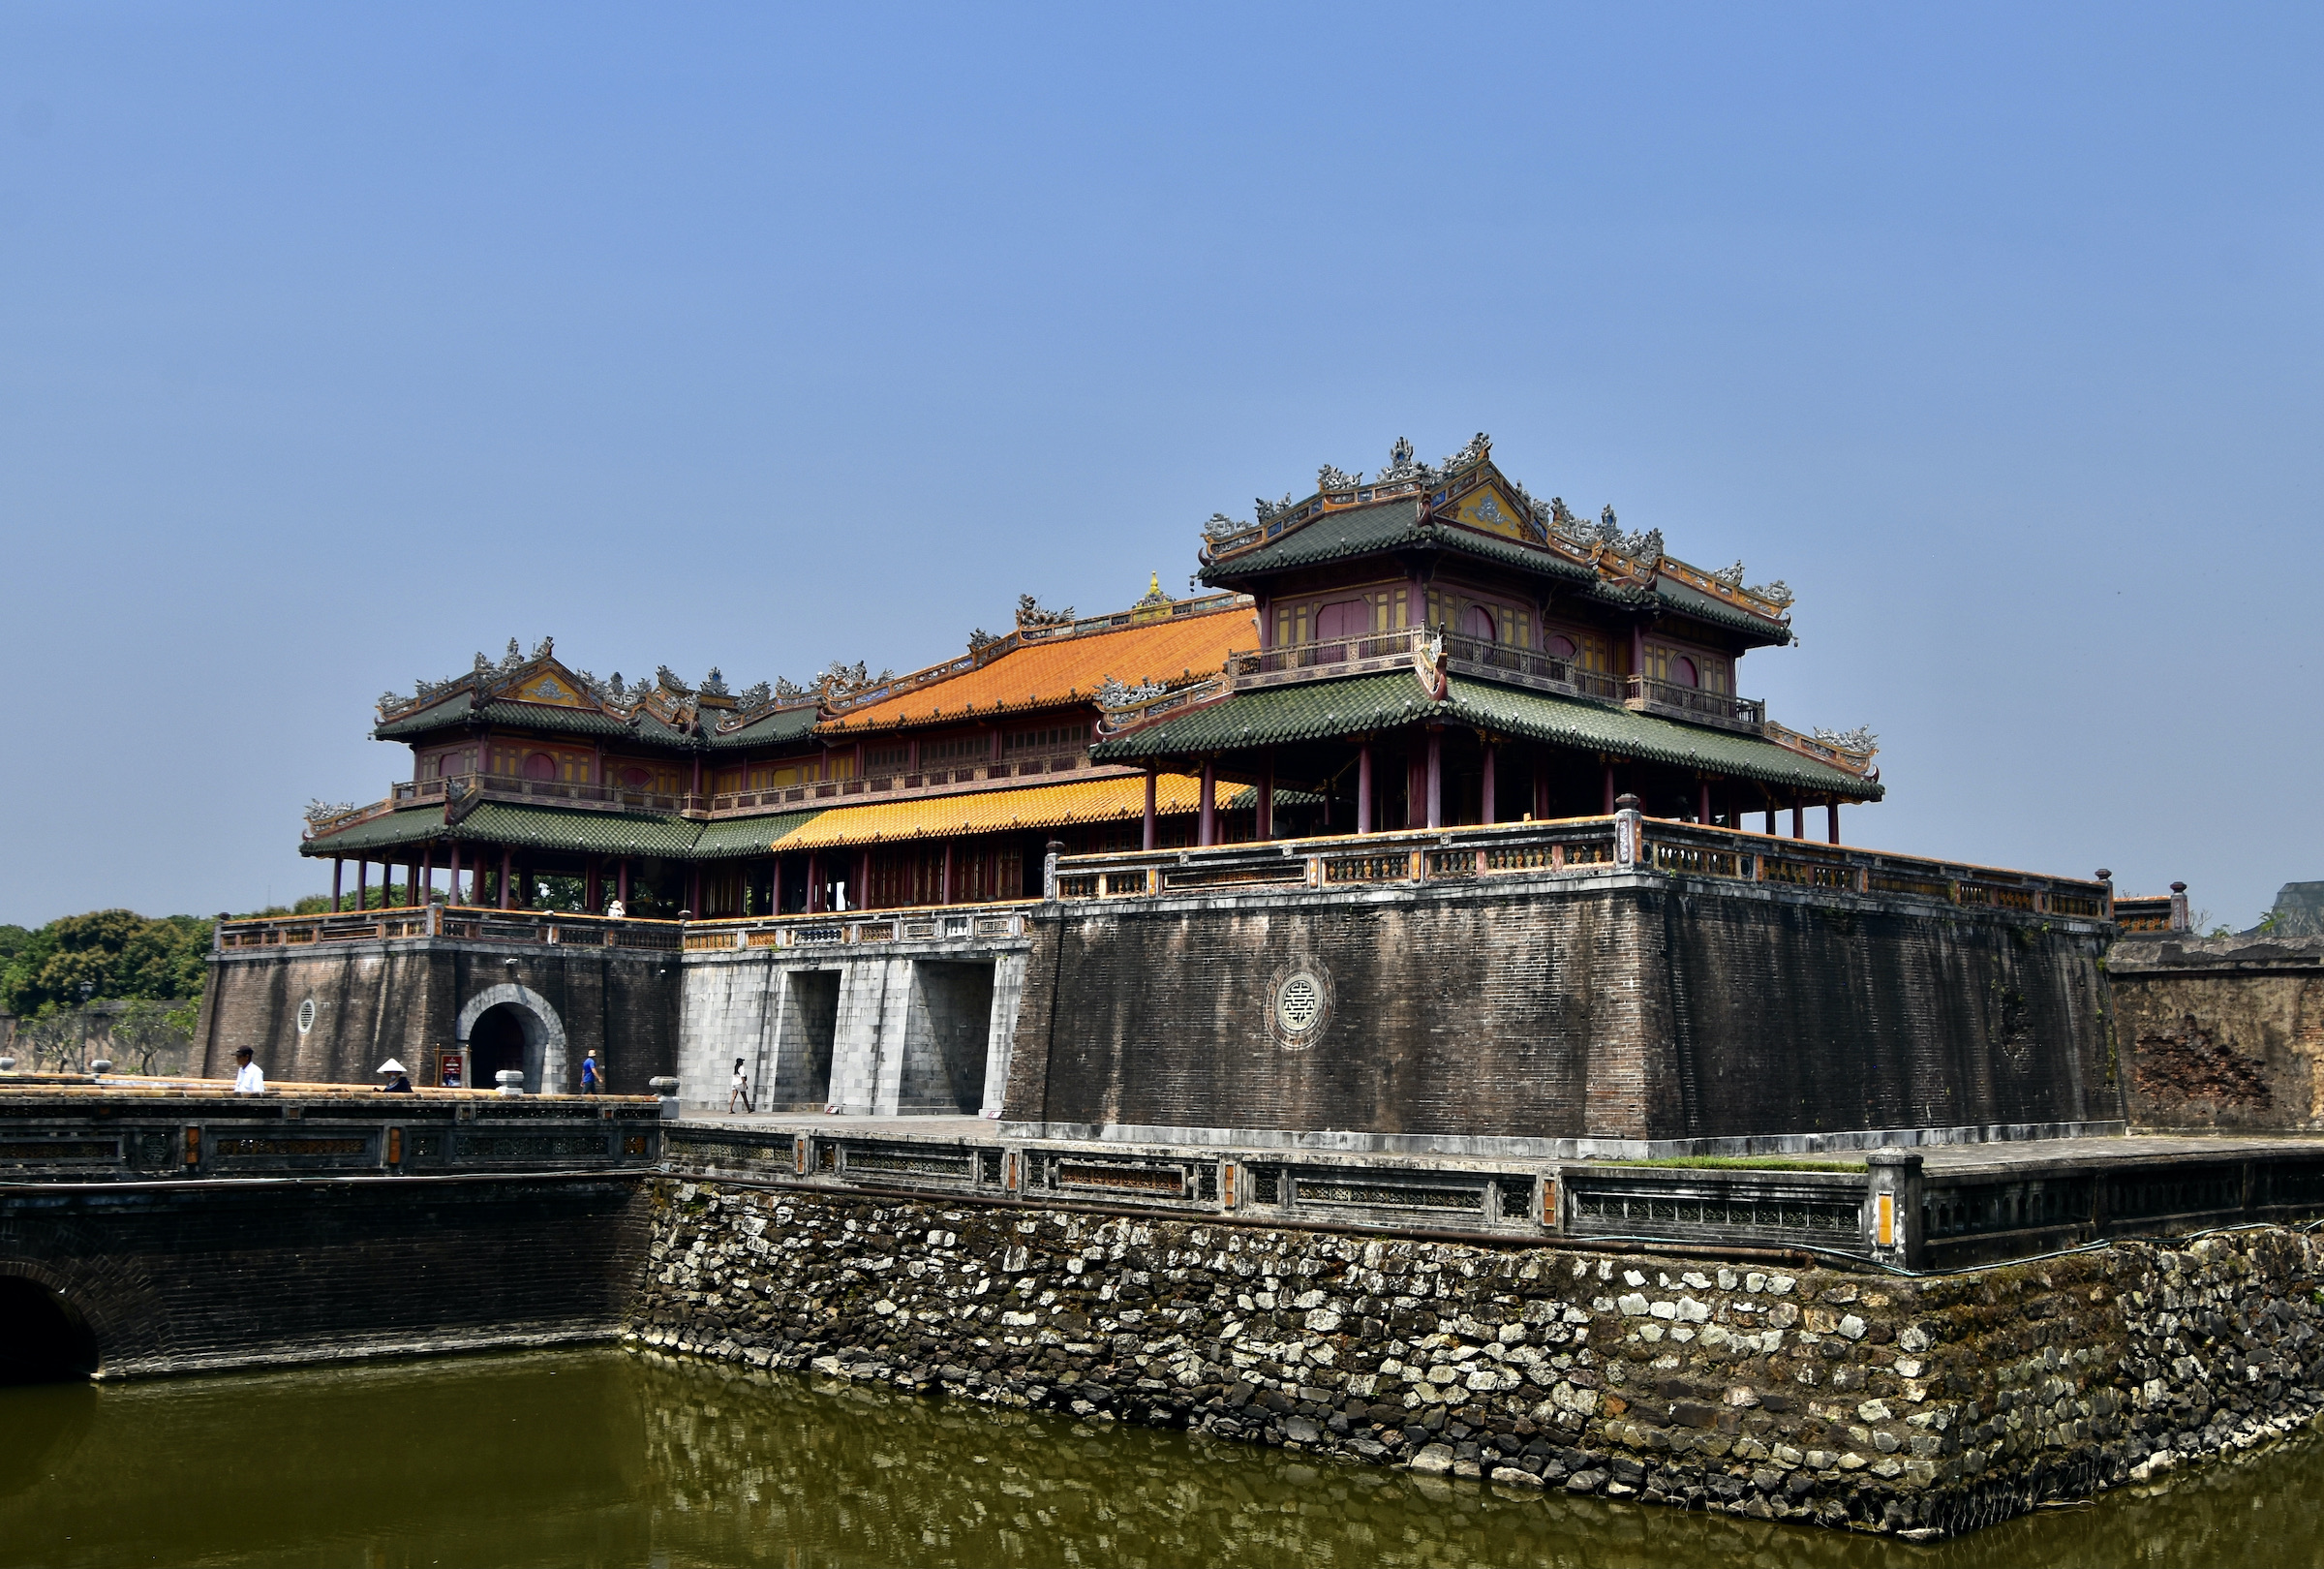 South Gate of Hue Citadel